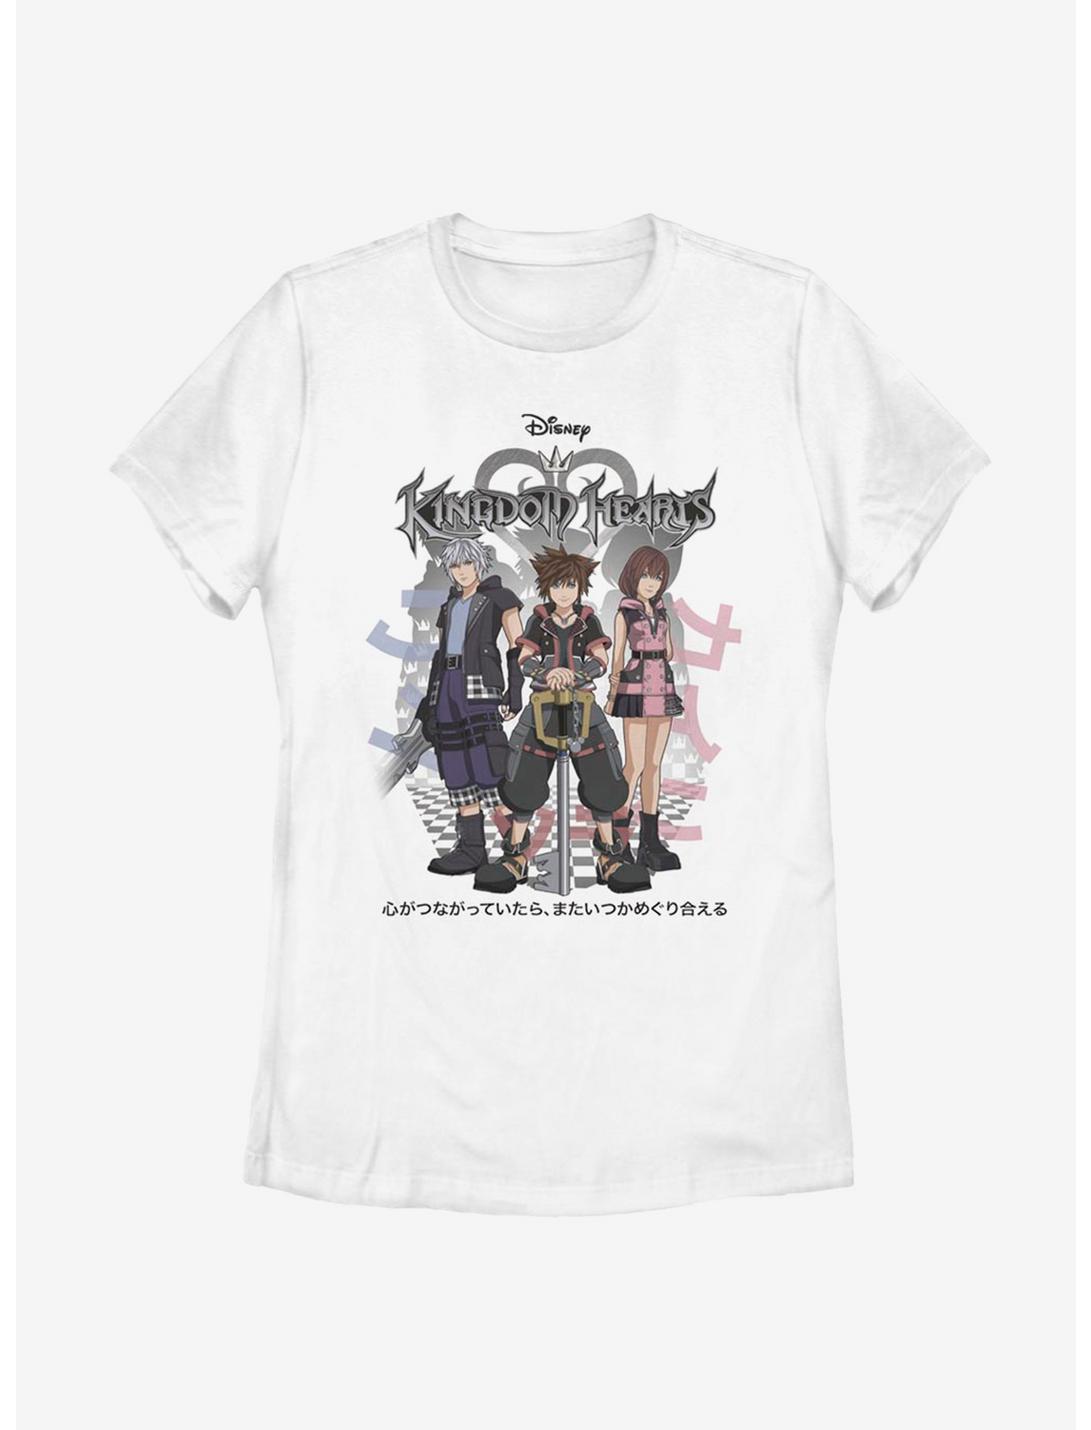 Disney Kingdom Hearts Group Japanese Text Womens T-Shirt, WHITE, hi-res